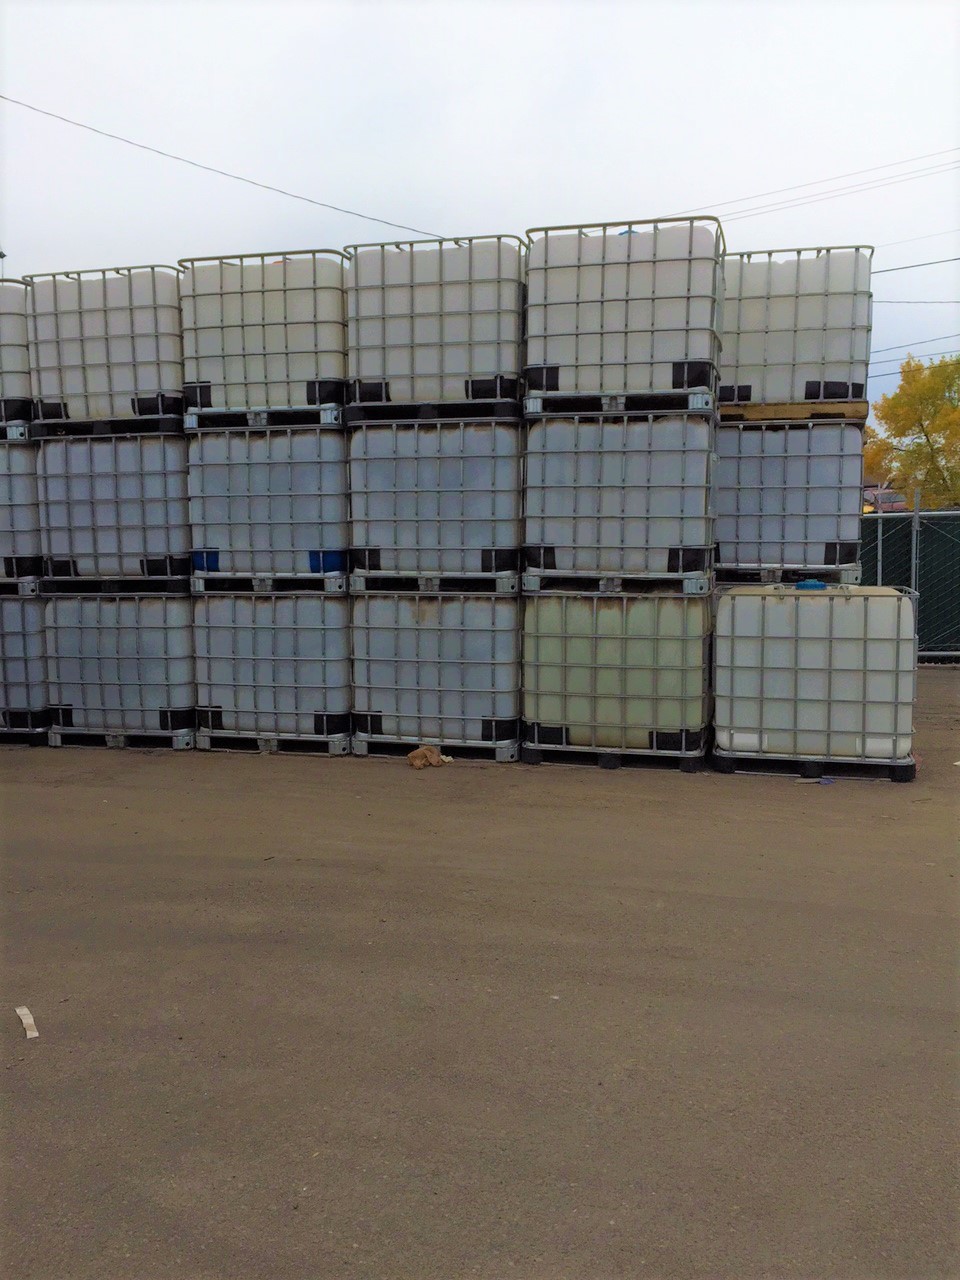 A wall of pesticide shuttles